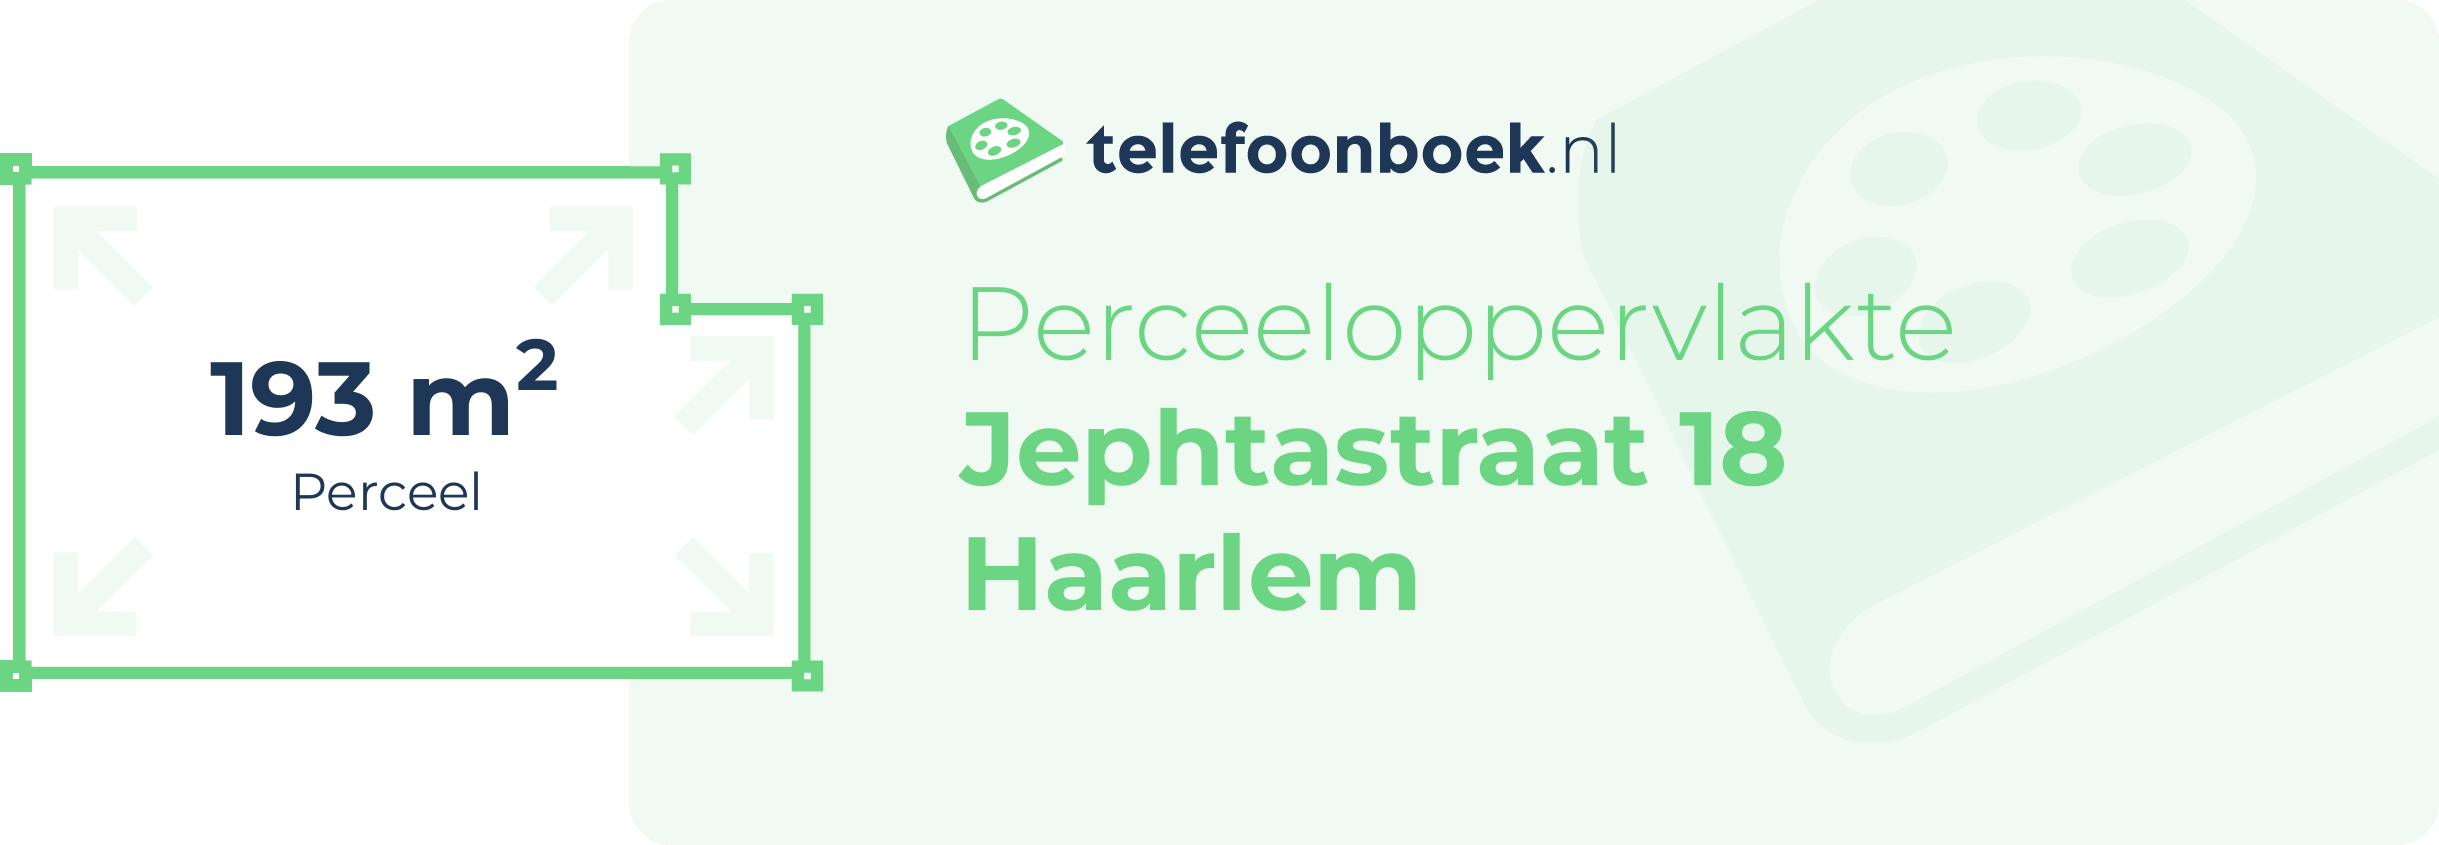 Perceeloppervlakte Jephtastraat 18 Haarlem